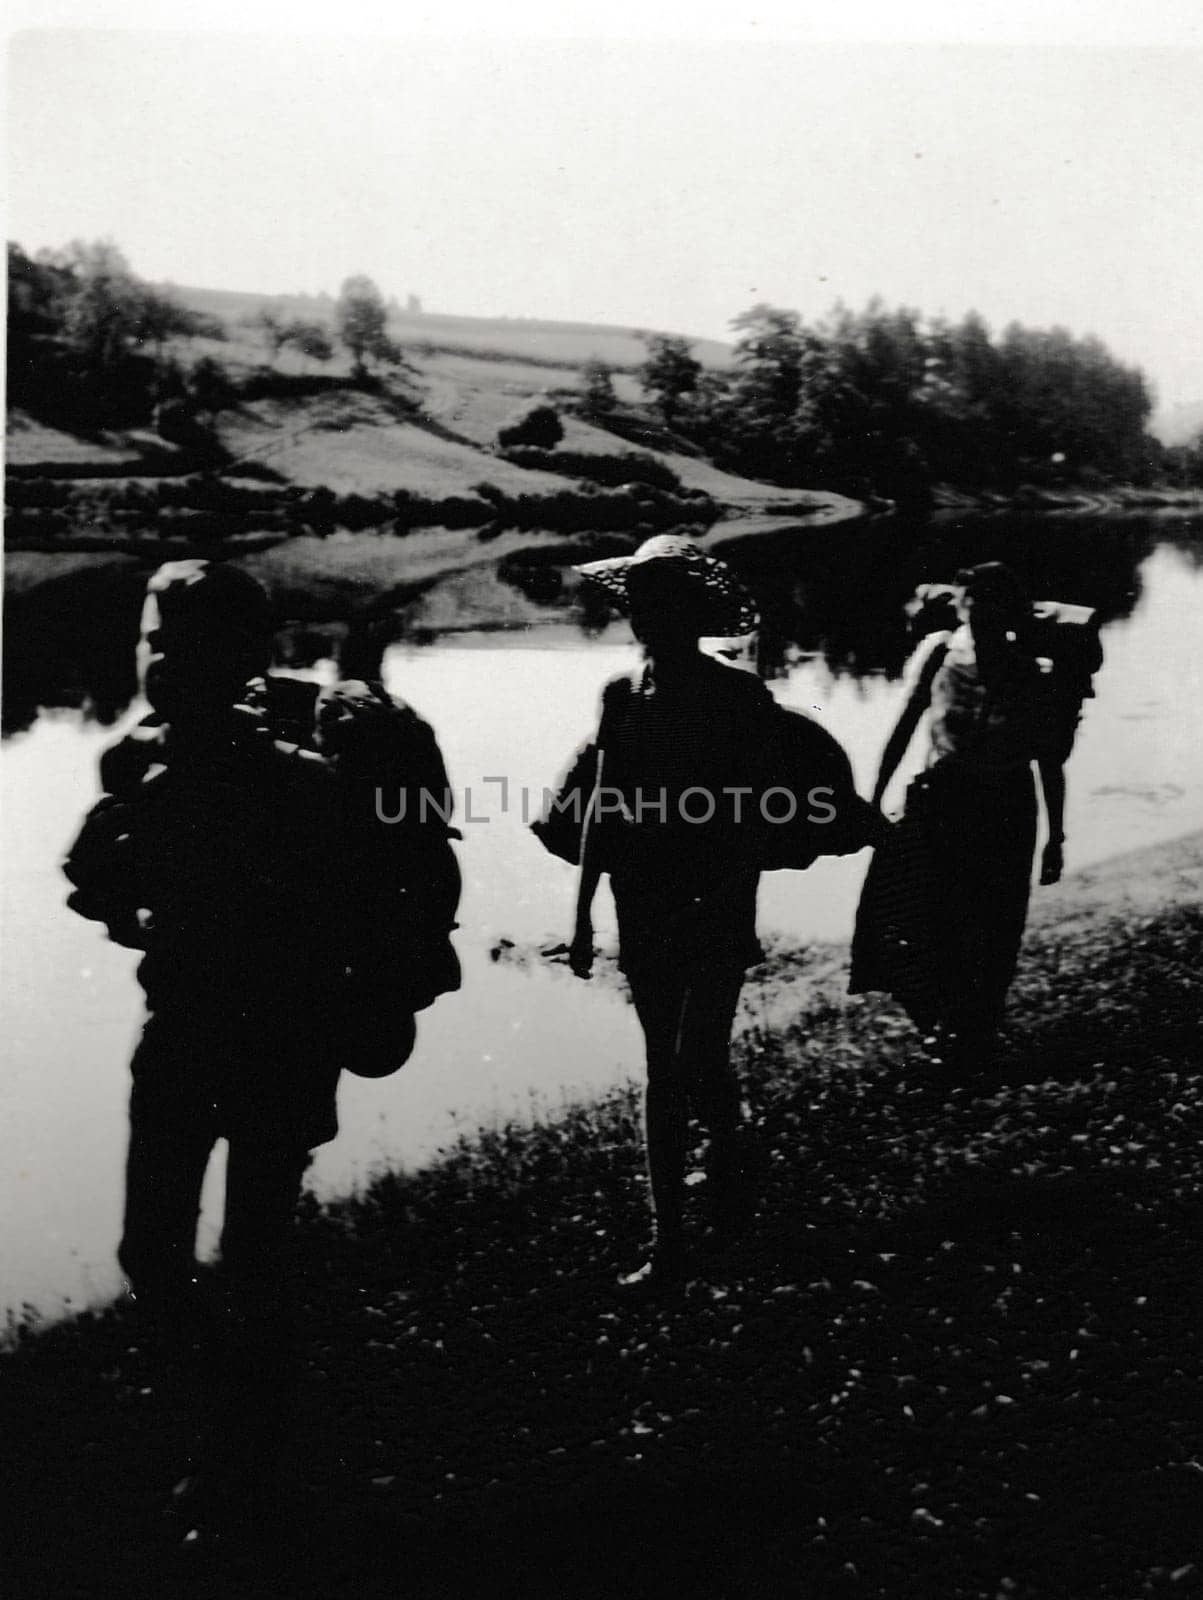 THE CZECHOSLOVAK SOCIALIST REPUBLIC - CIRCA 1950s: Retro photo shows tourists outside. Boys go alog the river bank. Vintage black and white photography.